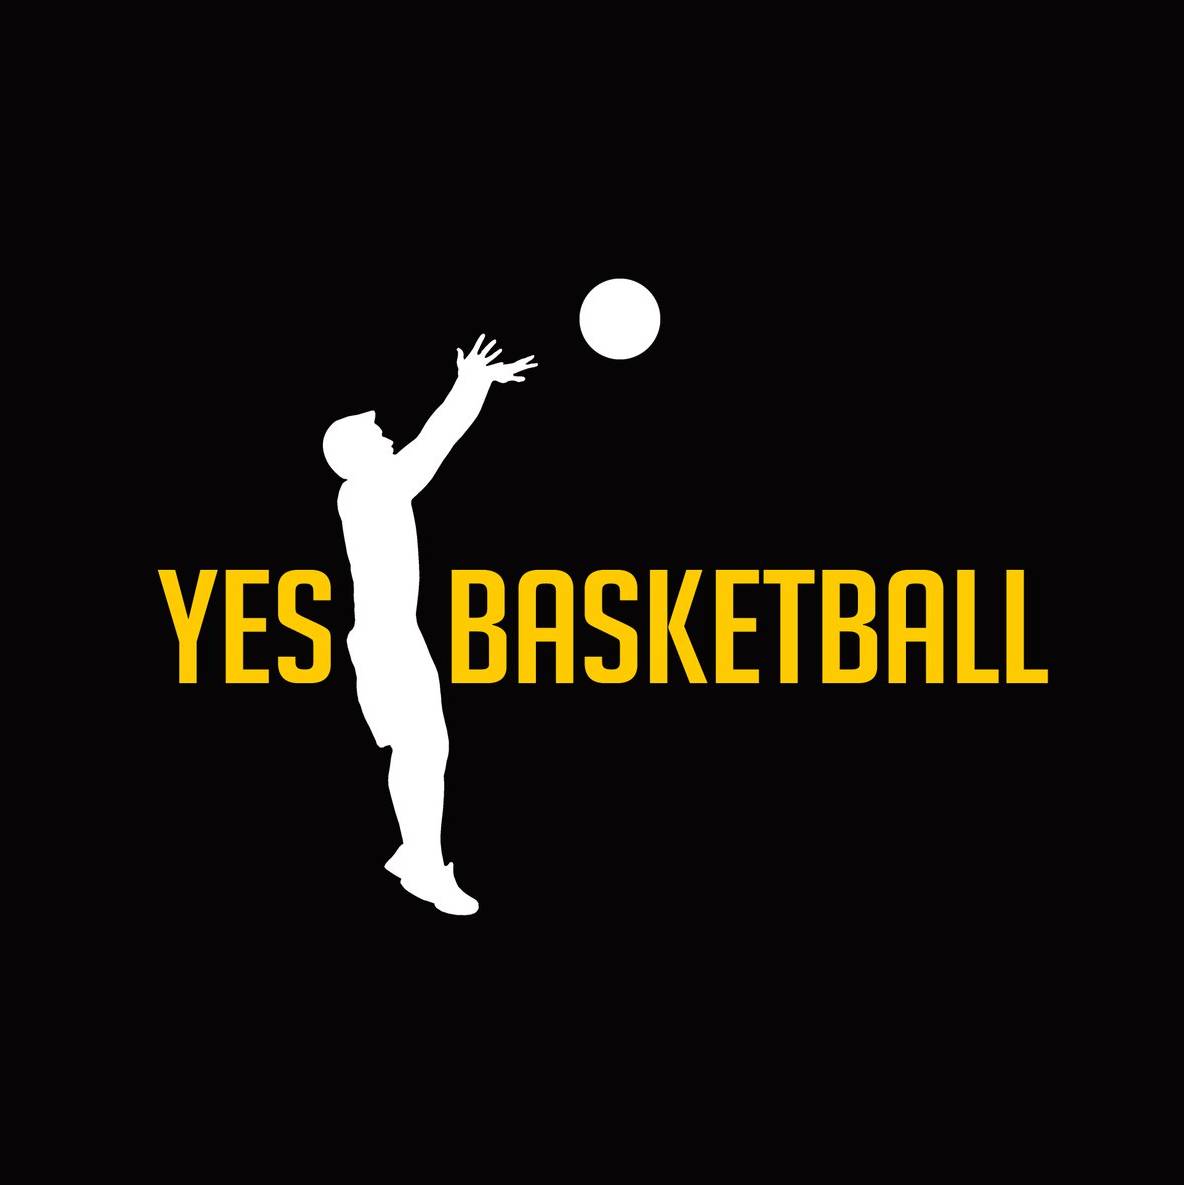 Yes basket. Yes Basketball.